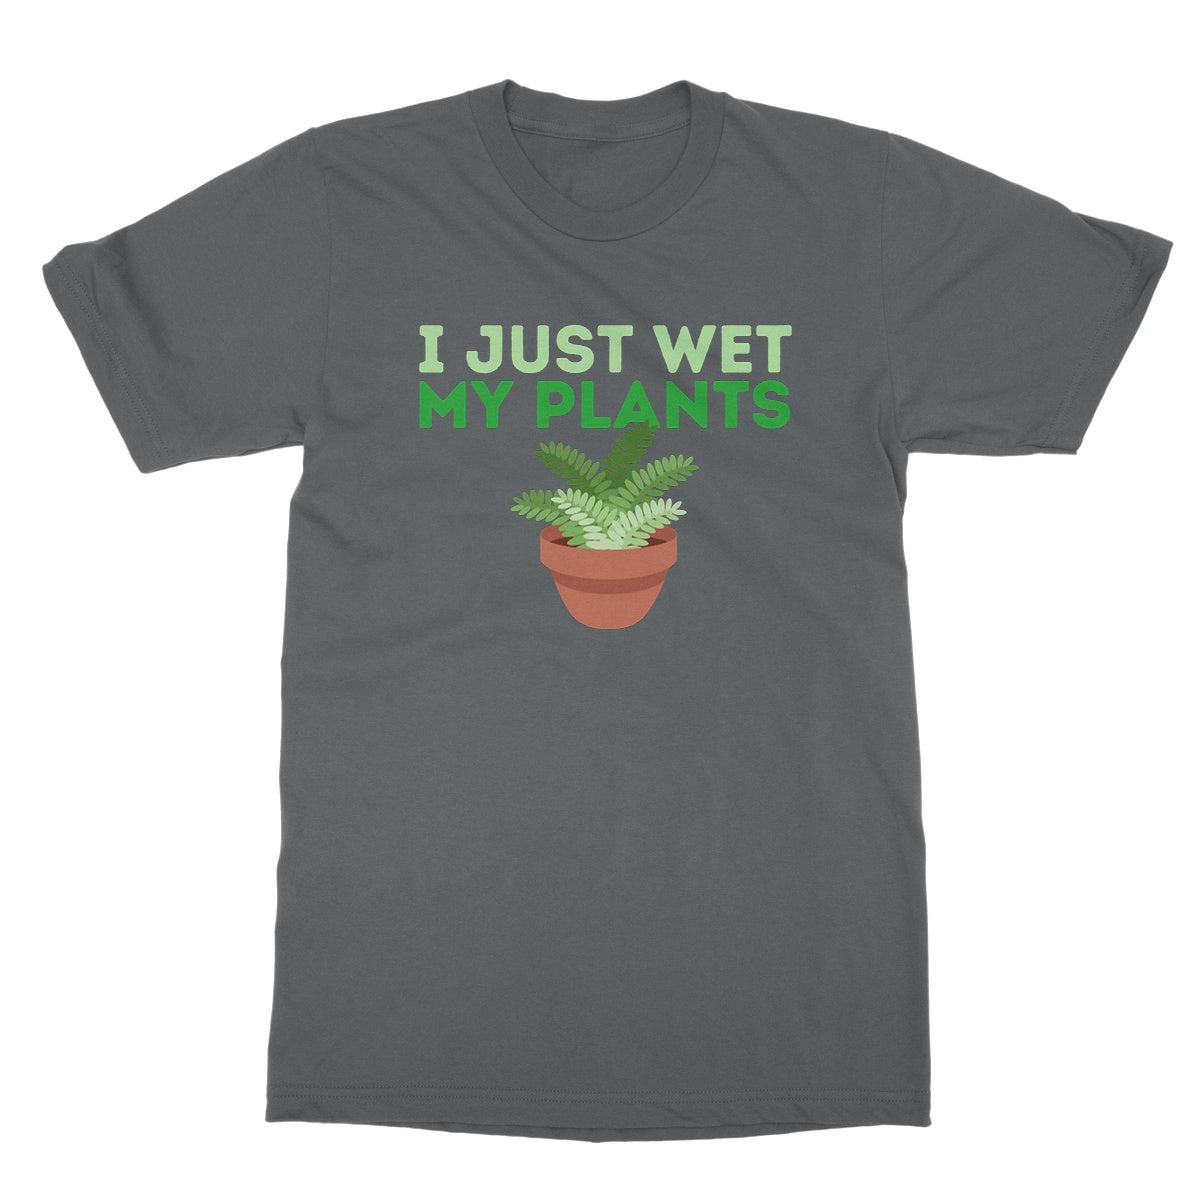 I just wet my plants t shirt grey